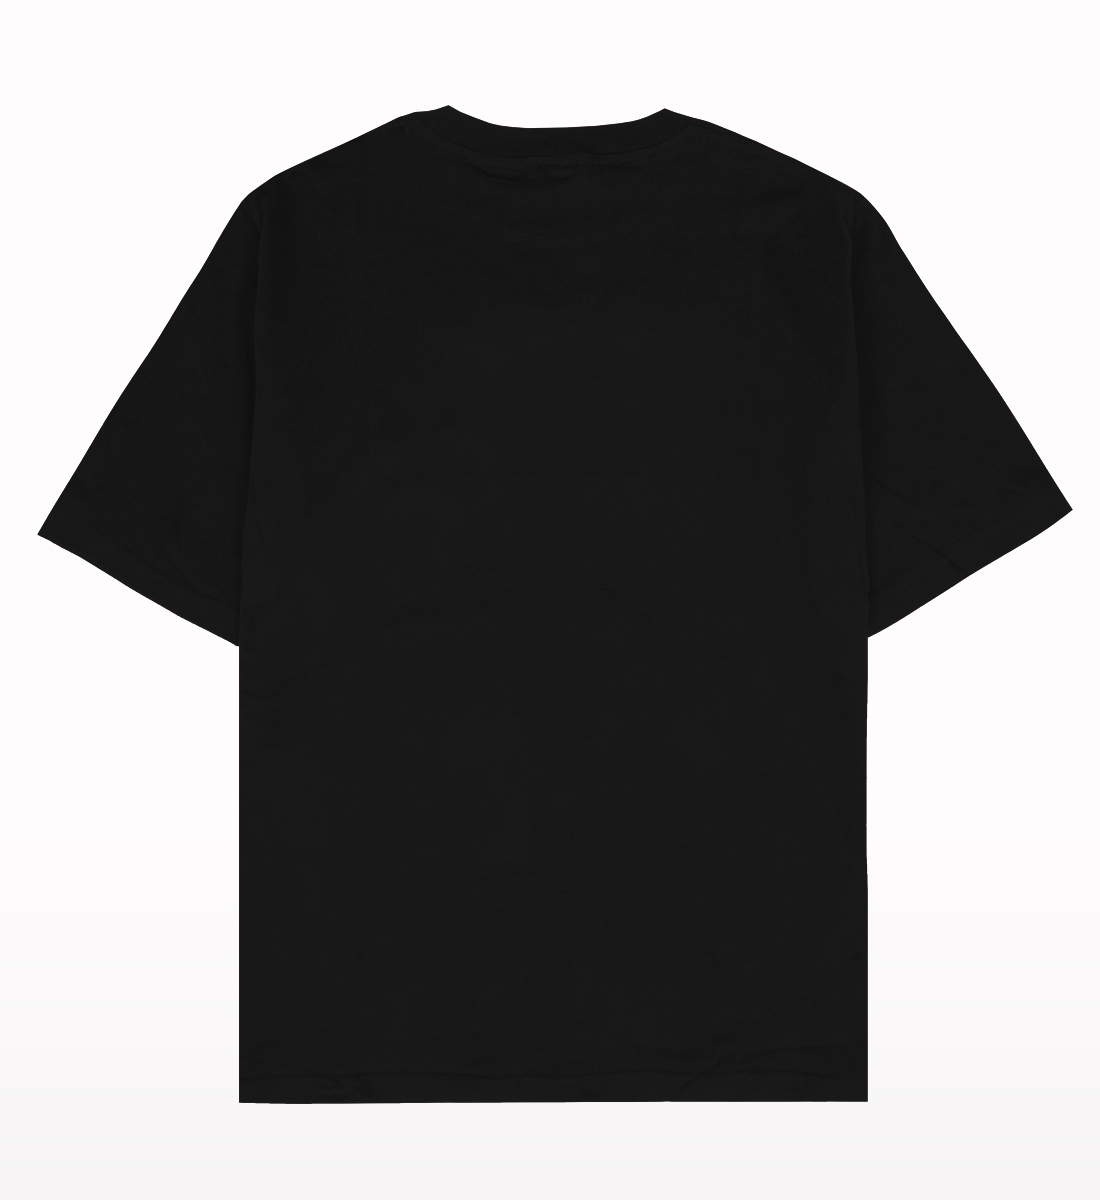 Oversized Drop Shoulder Black Plain T shirt Crunkthread com